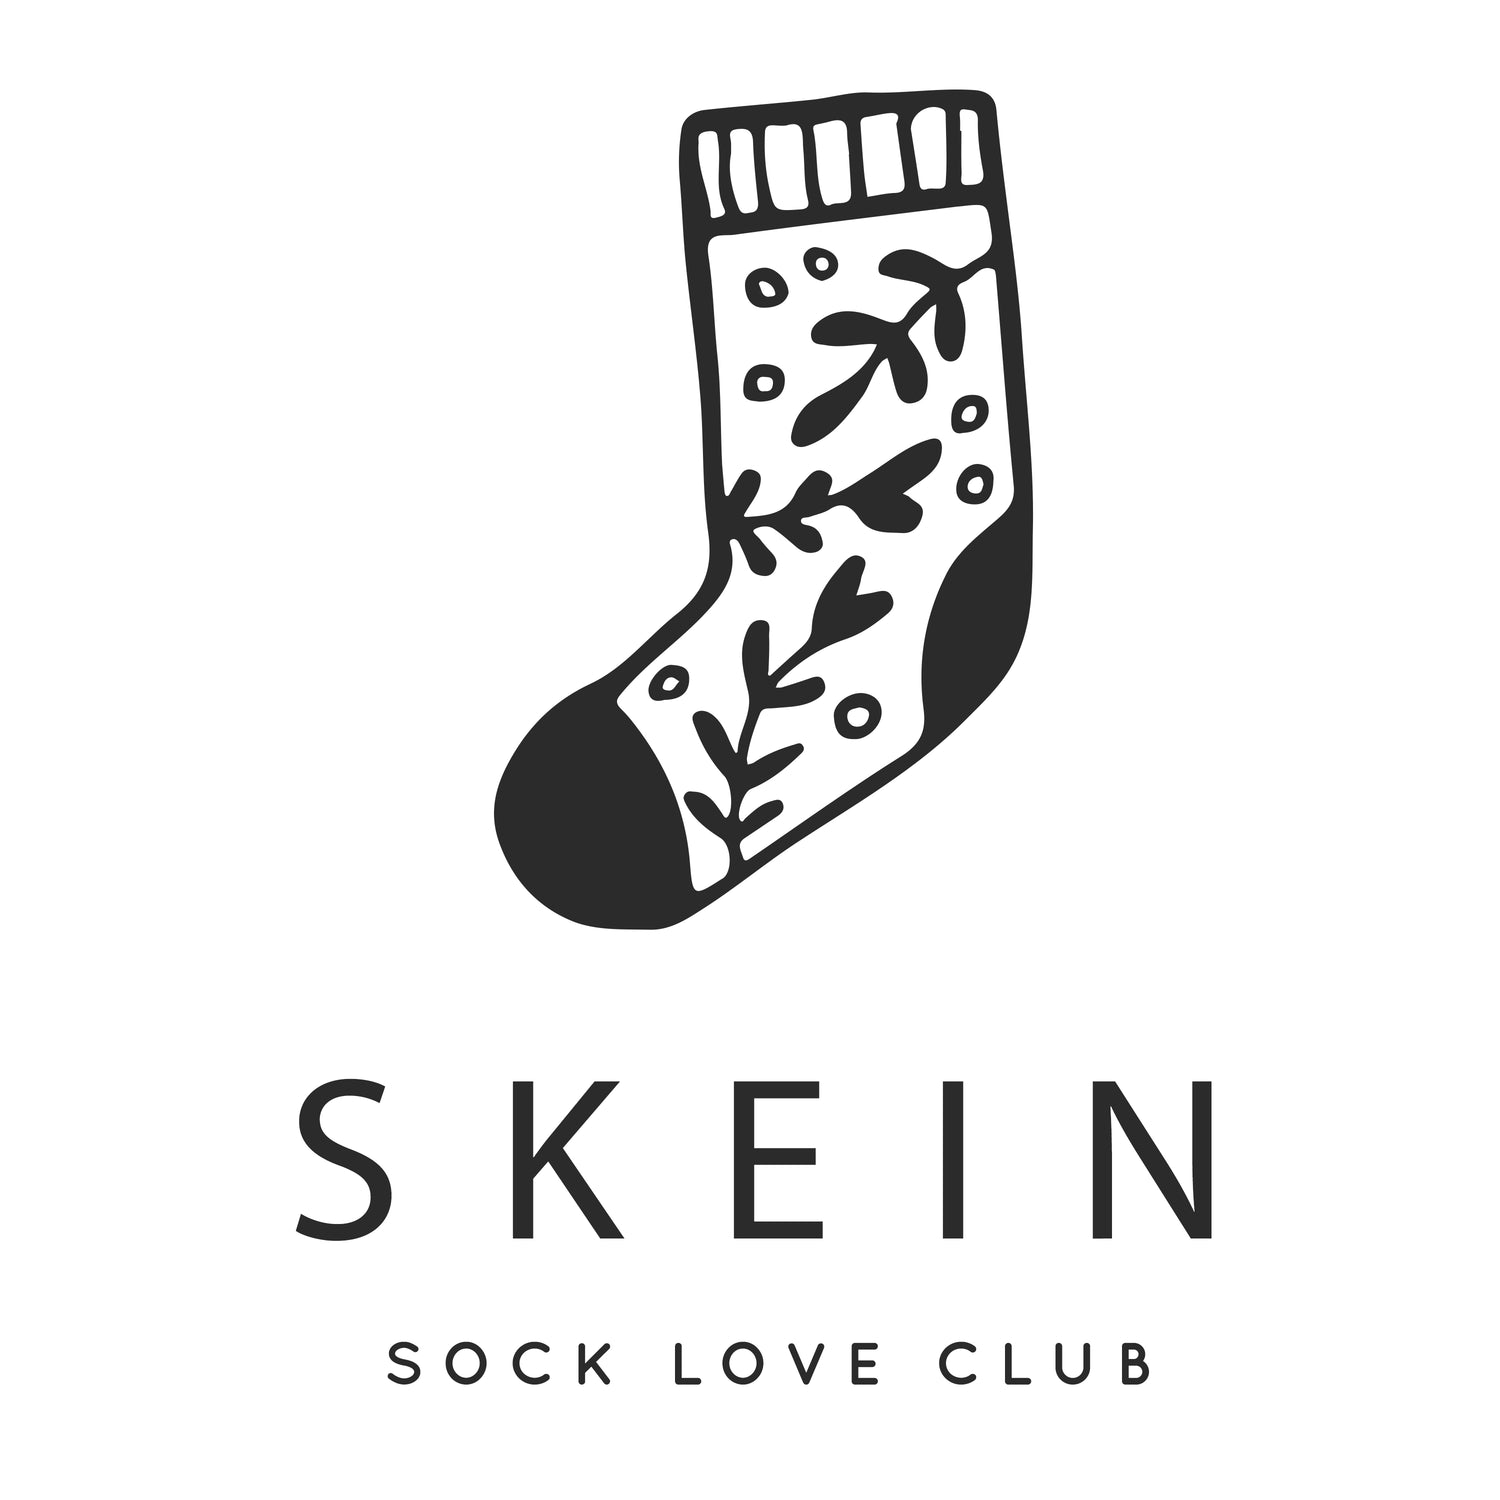 Coming Wednesday - Sock Love Club